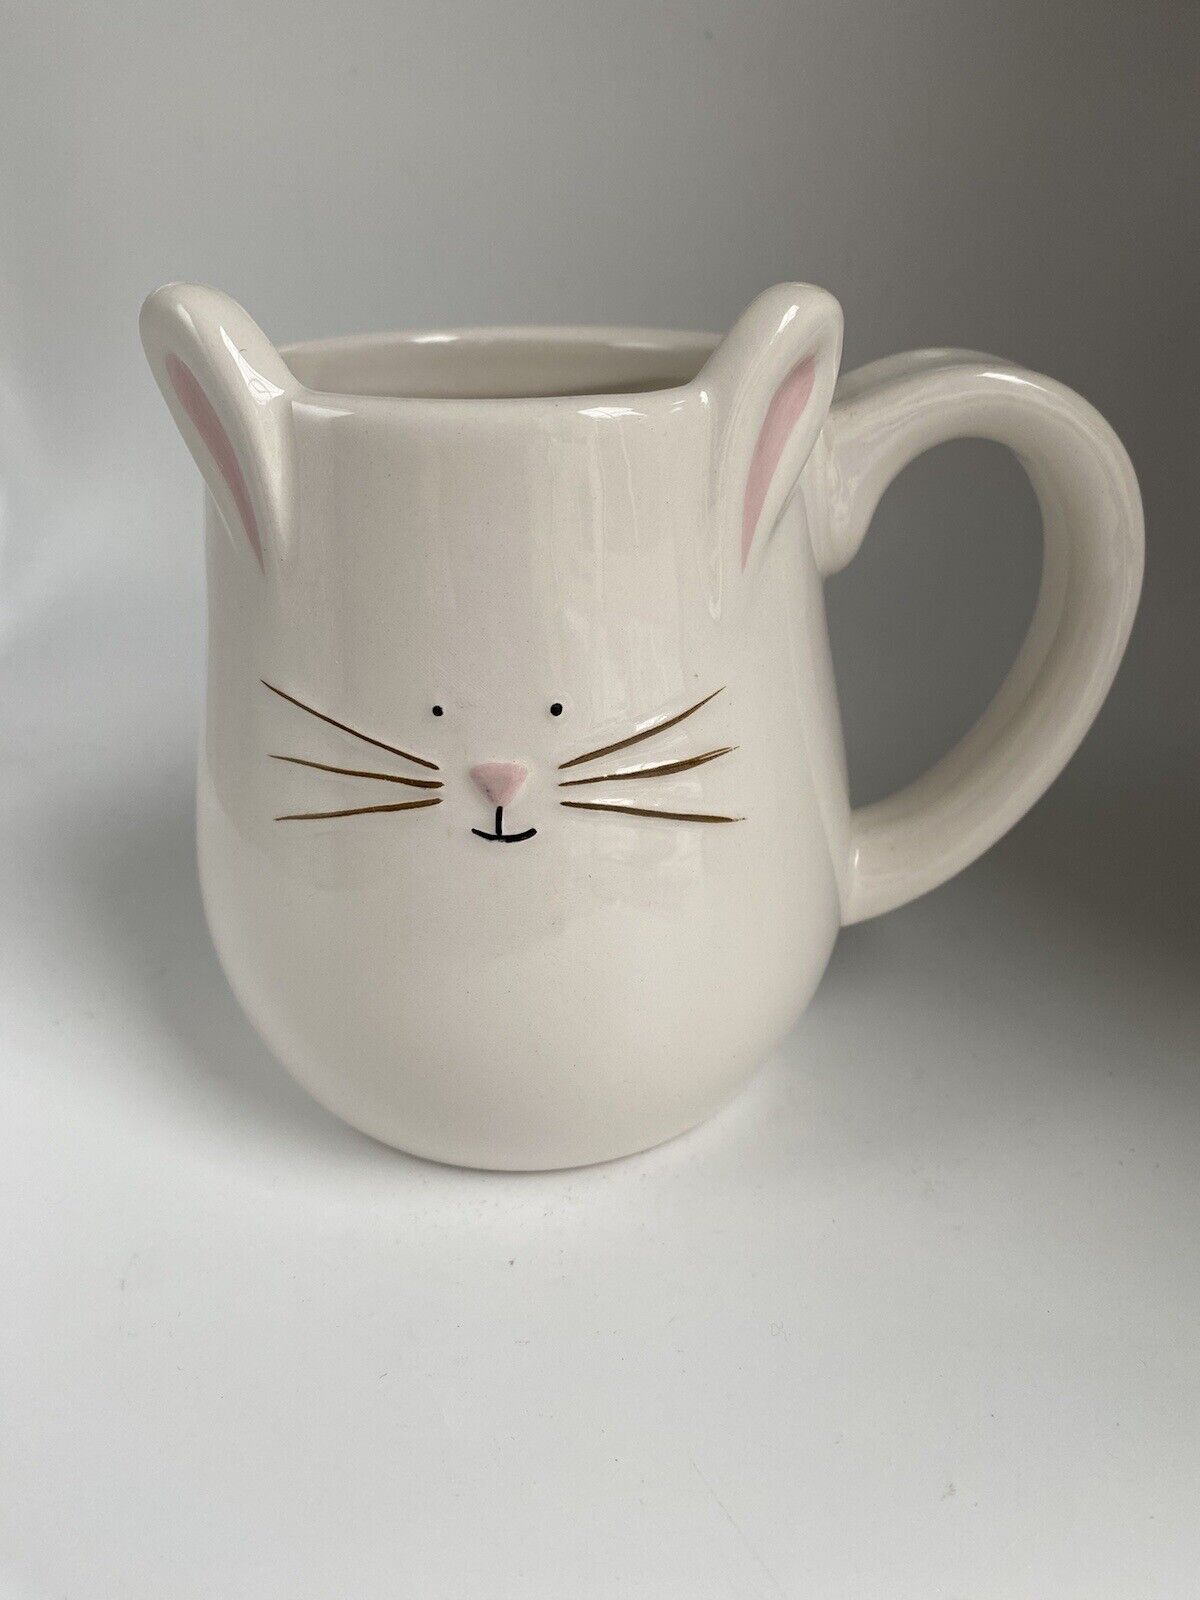 Tag Bunny Rabbit Ceramic Coffee Tea Mug Cup 3D 14 Oz